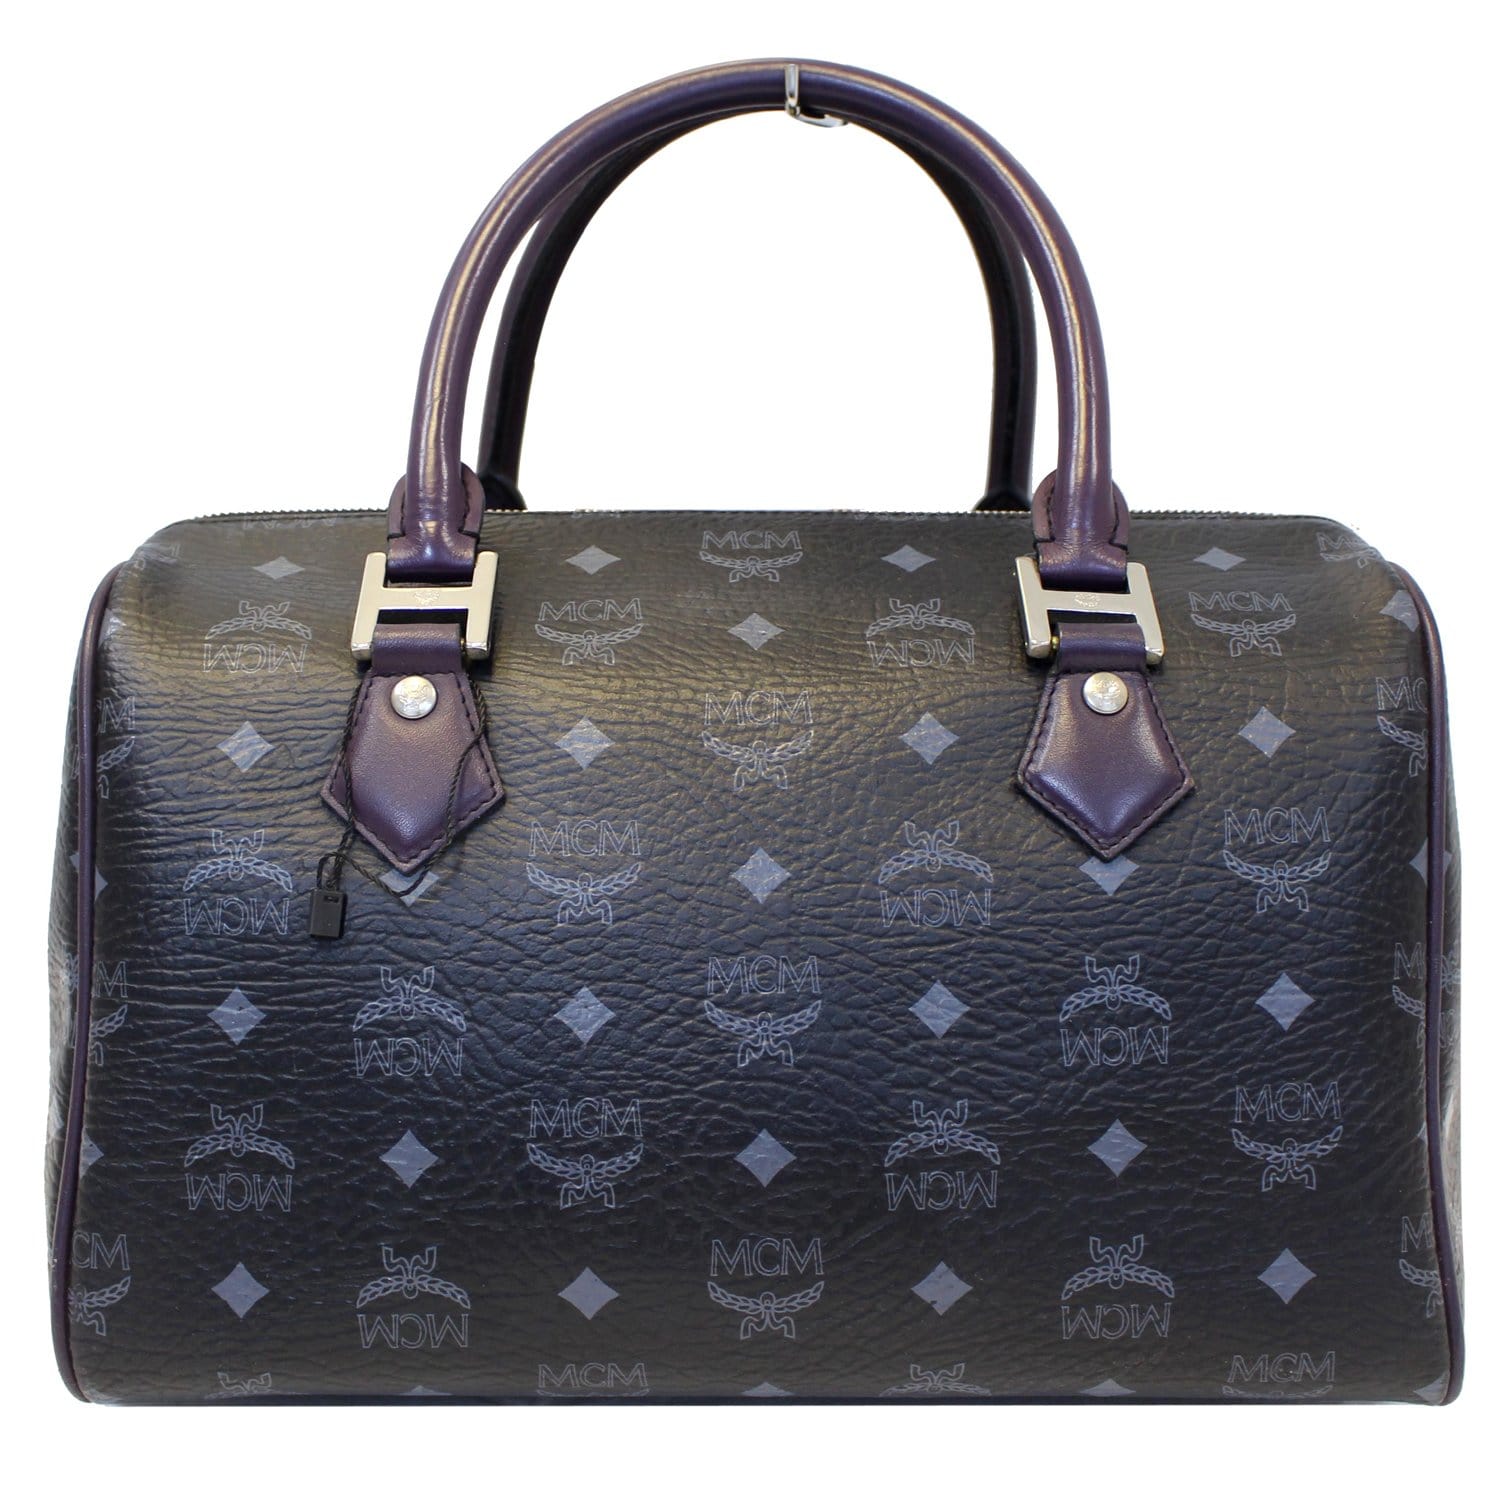 streetstyle #lfw  Mcm handbags, Bags, Mcm bags